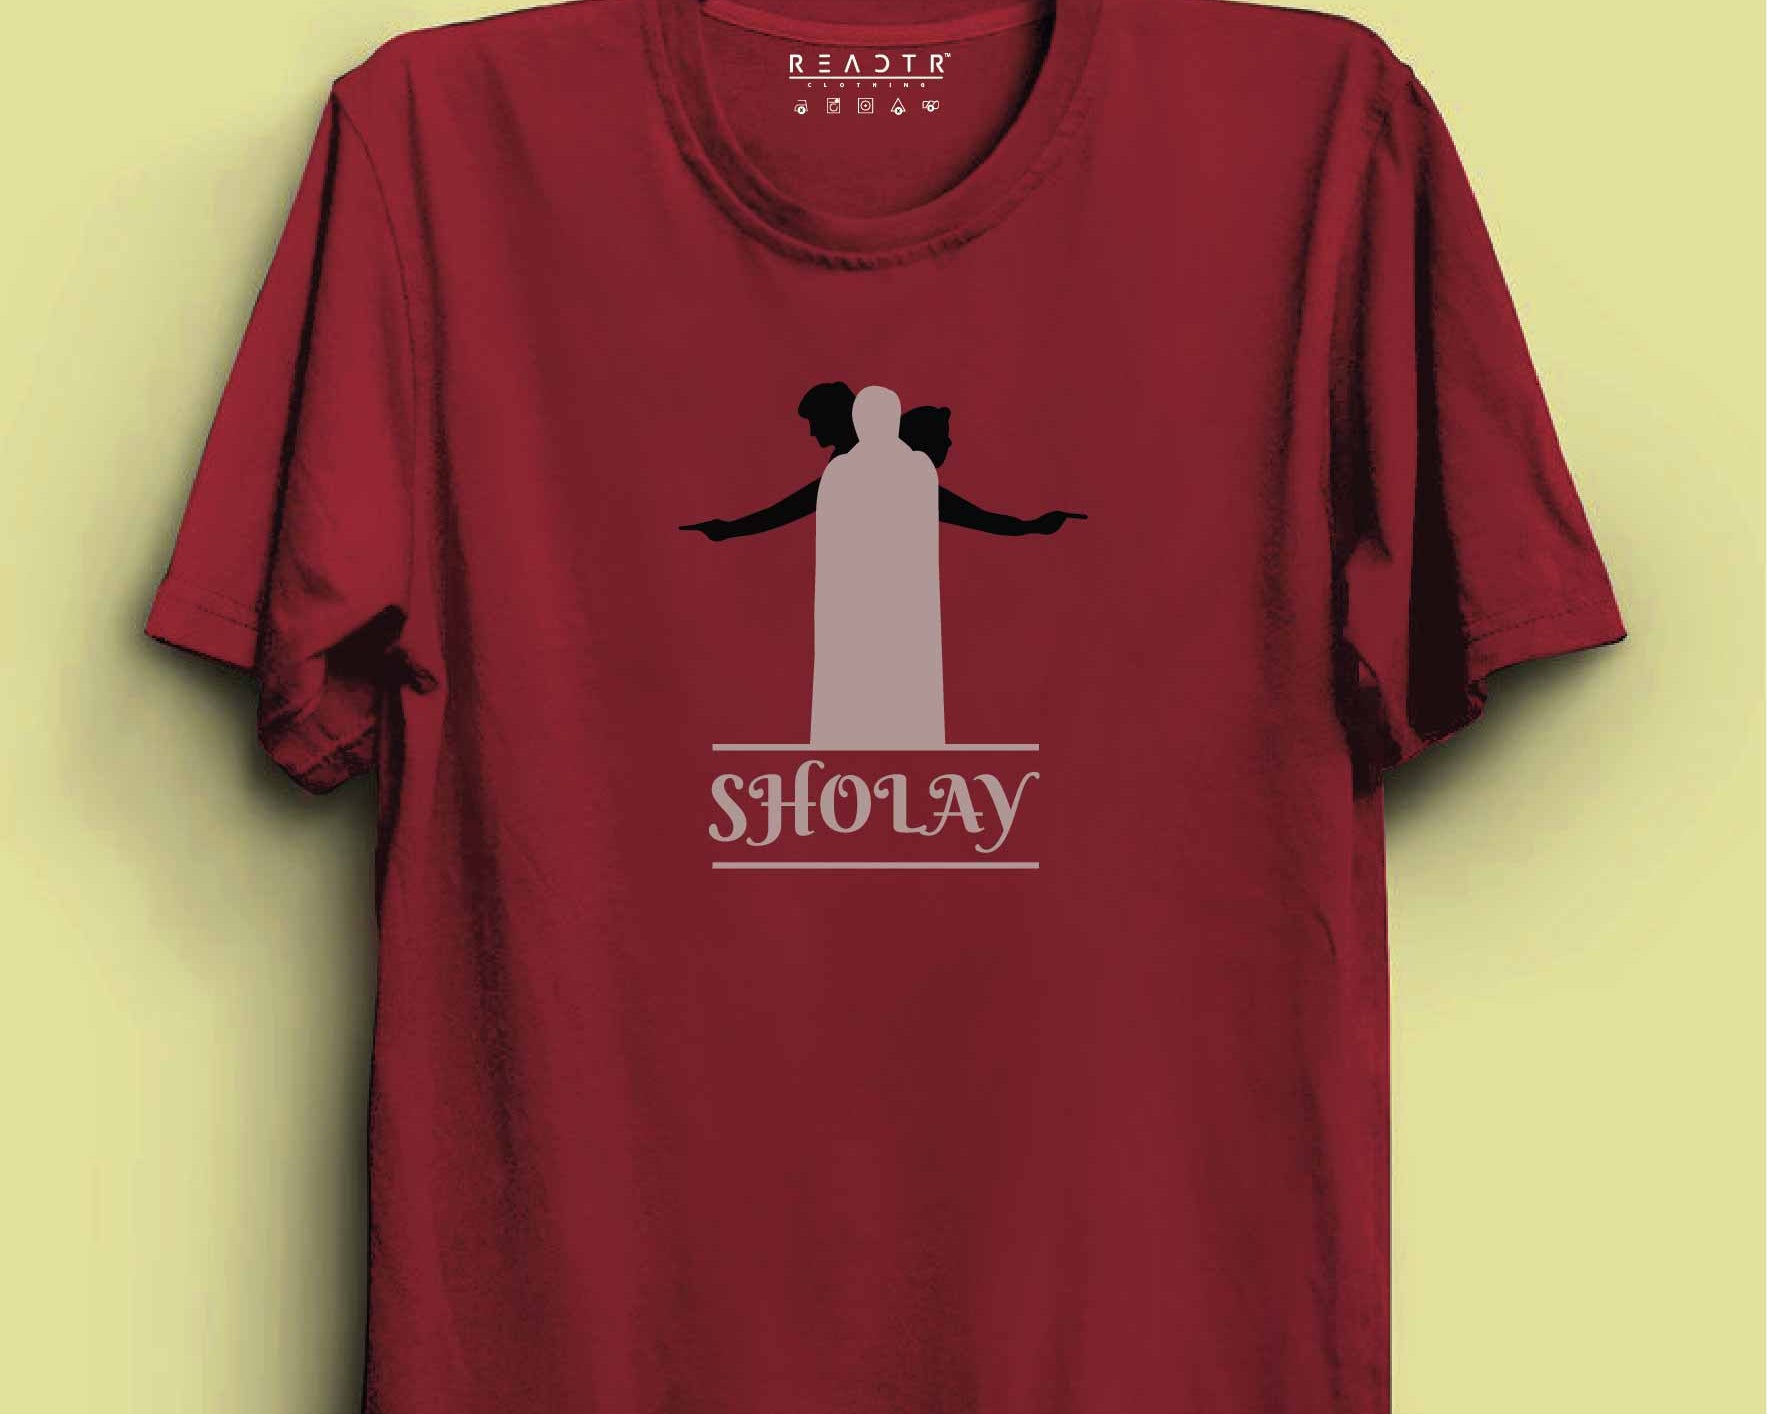 Sholay Reactr Tshirts For Men - Eyewearlabs